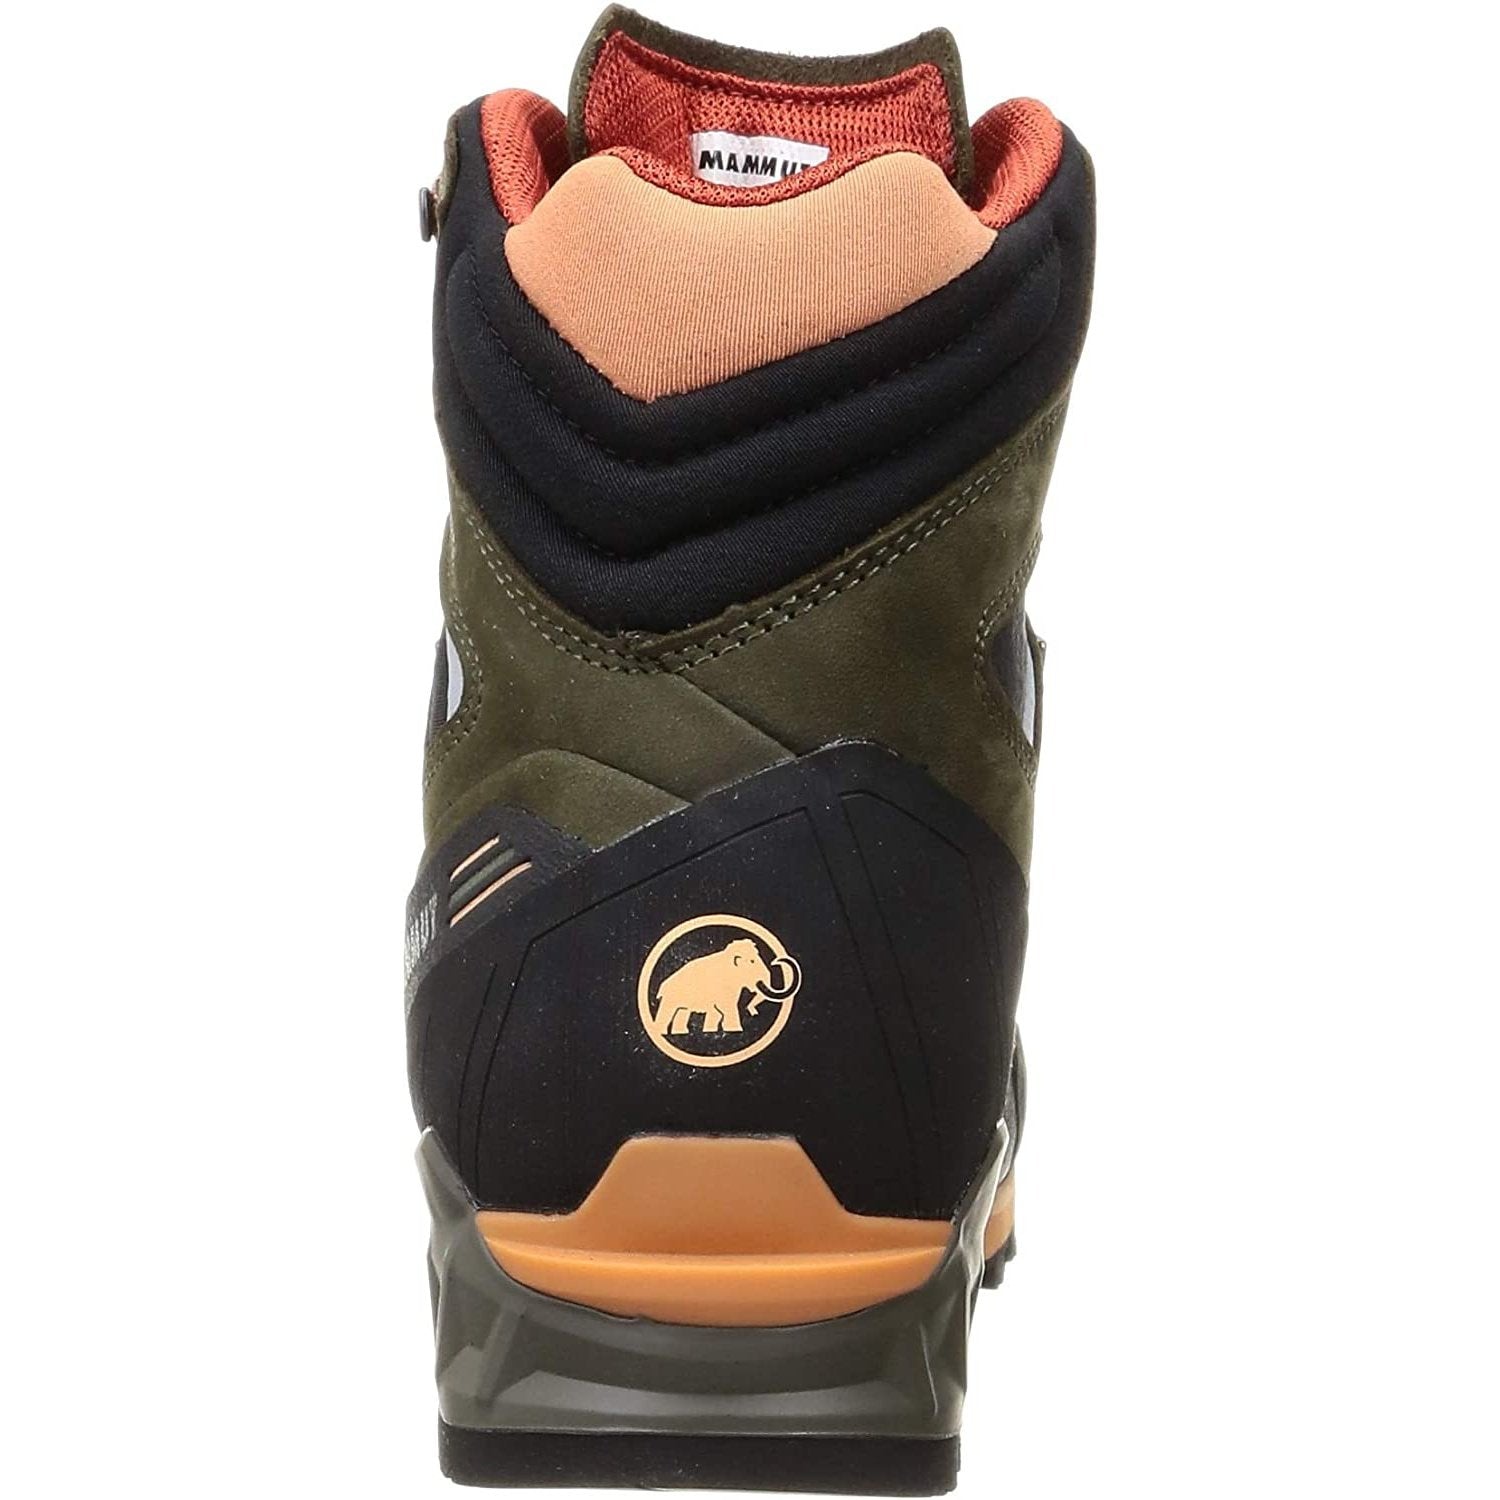 Women's Hiking Boots Size 10 Mammut Kento Guide High GTX-Waterproof, Brand  New